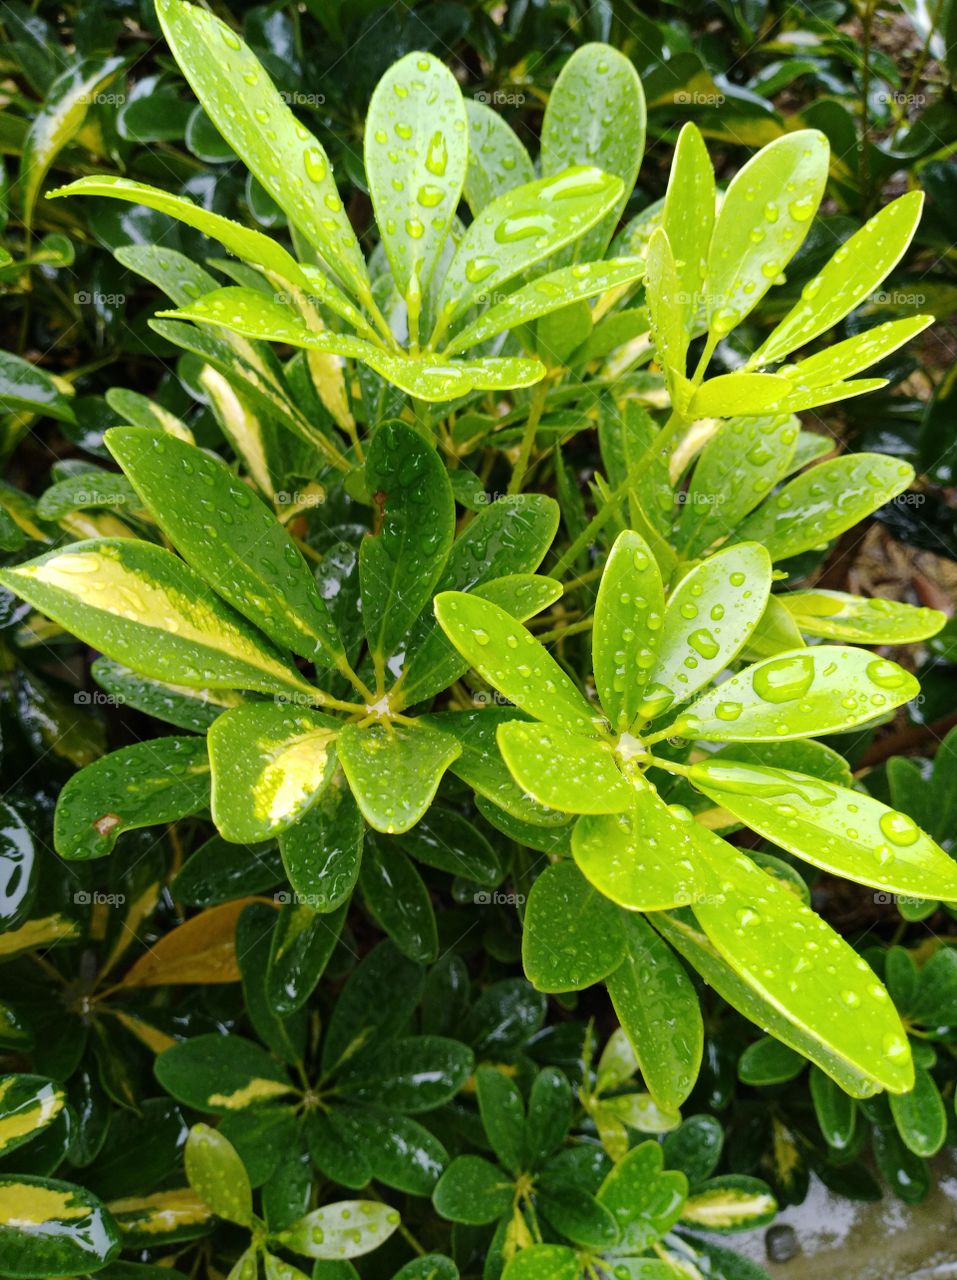 leaf & rain drop1